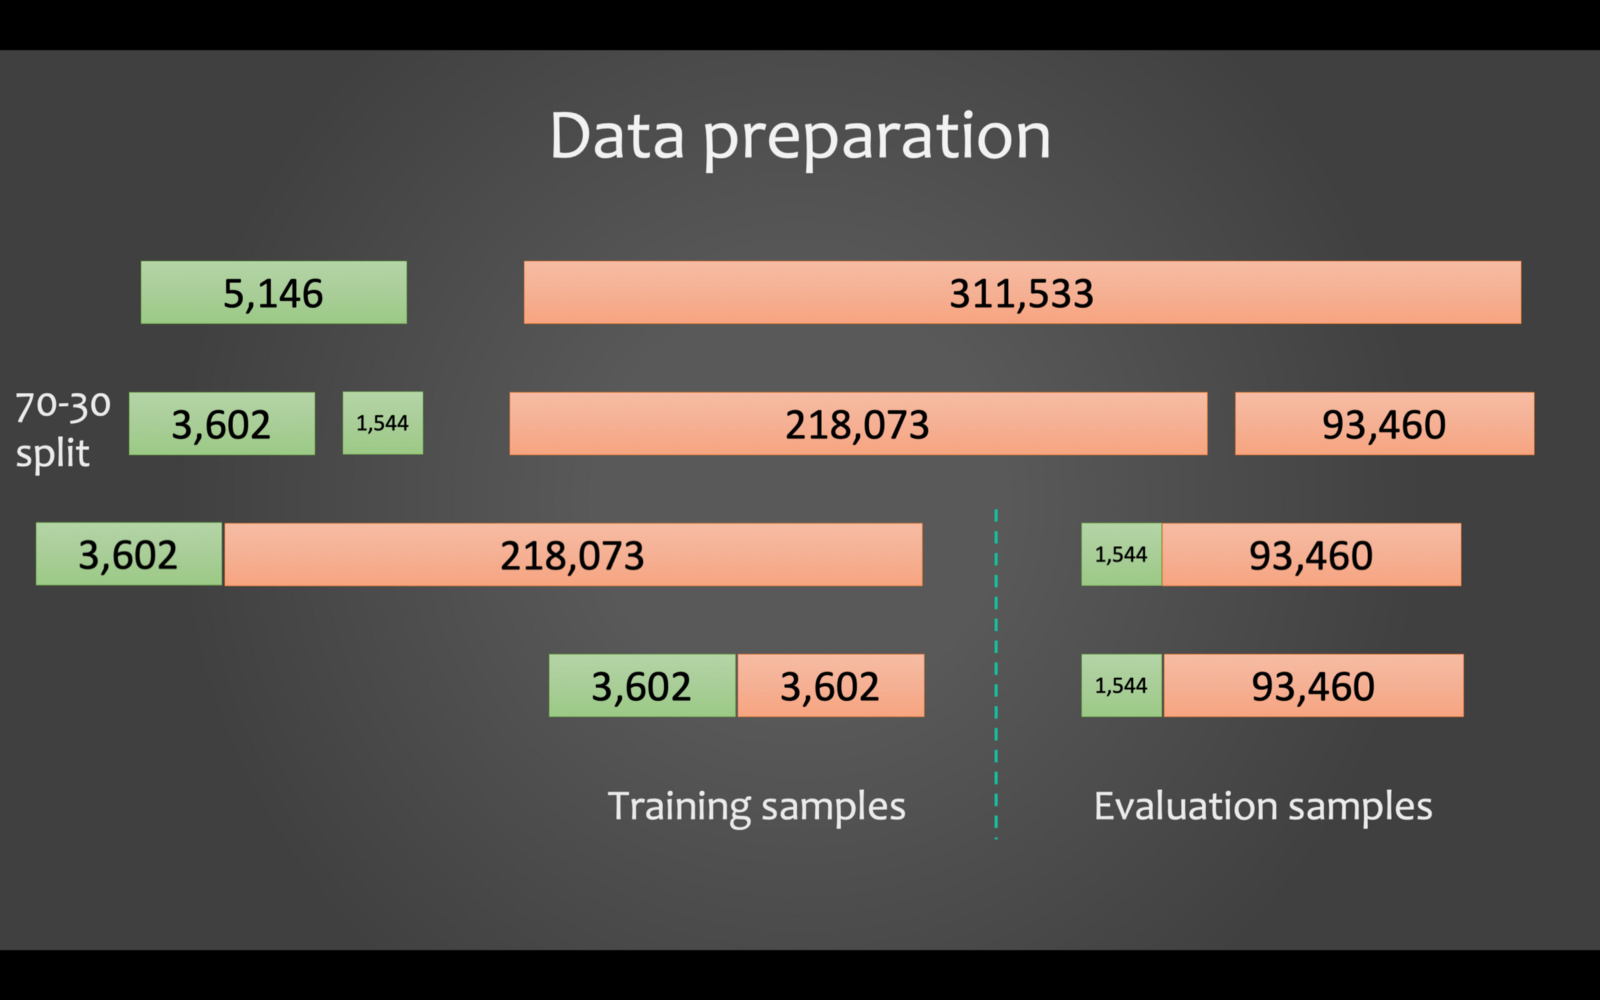 Data preparation